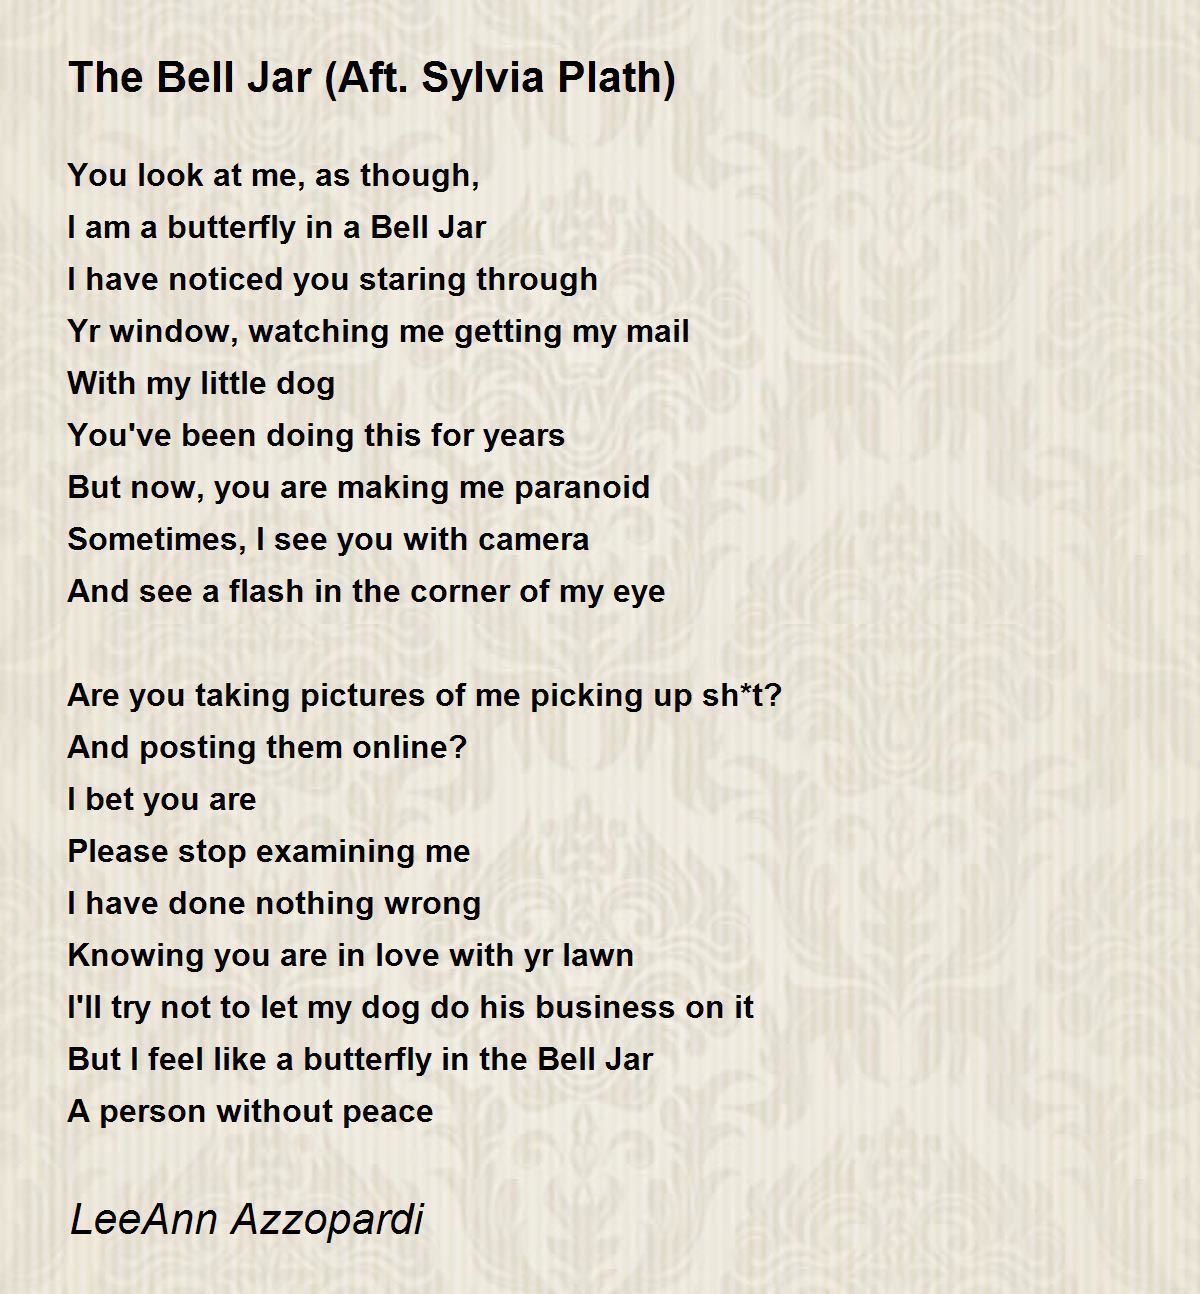 The Bell Jar (Aft. Sylvia Plath) - The Bell Jar (Aft. Sylvia Plath